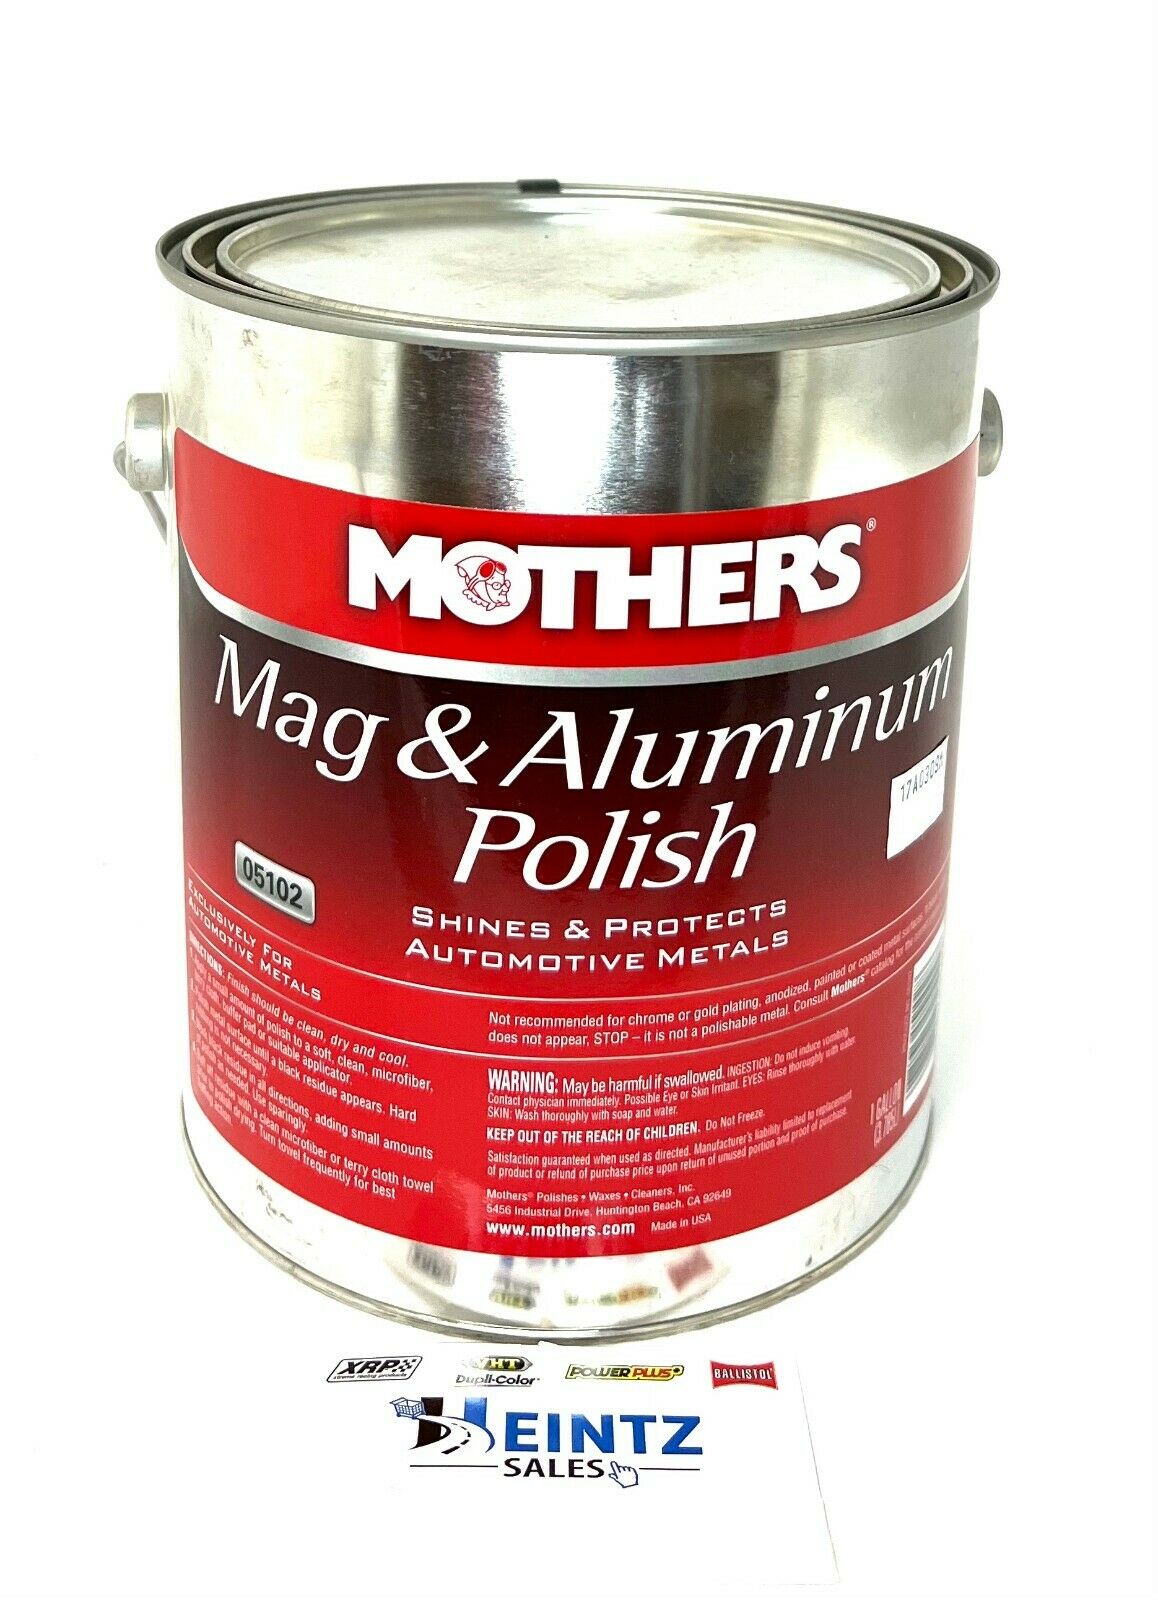 Mothers Mag & Aluminum Polish Metal Polish